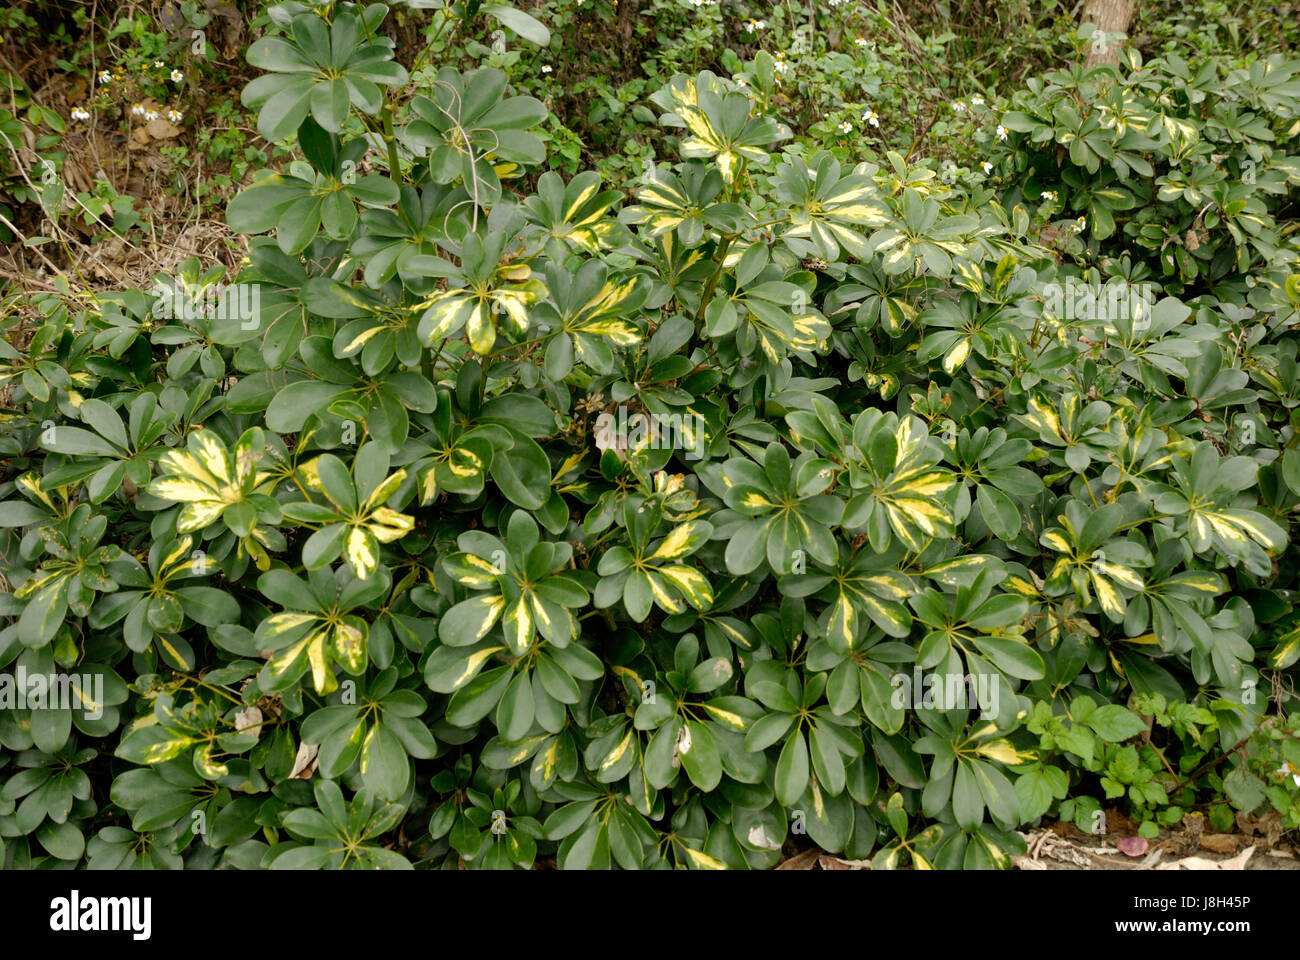 taiwan, leaf, plant, green, asia, leaves, taiwan, growing wild, foliage, Stock Photo